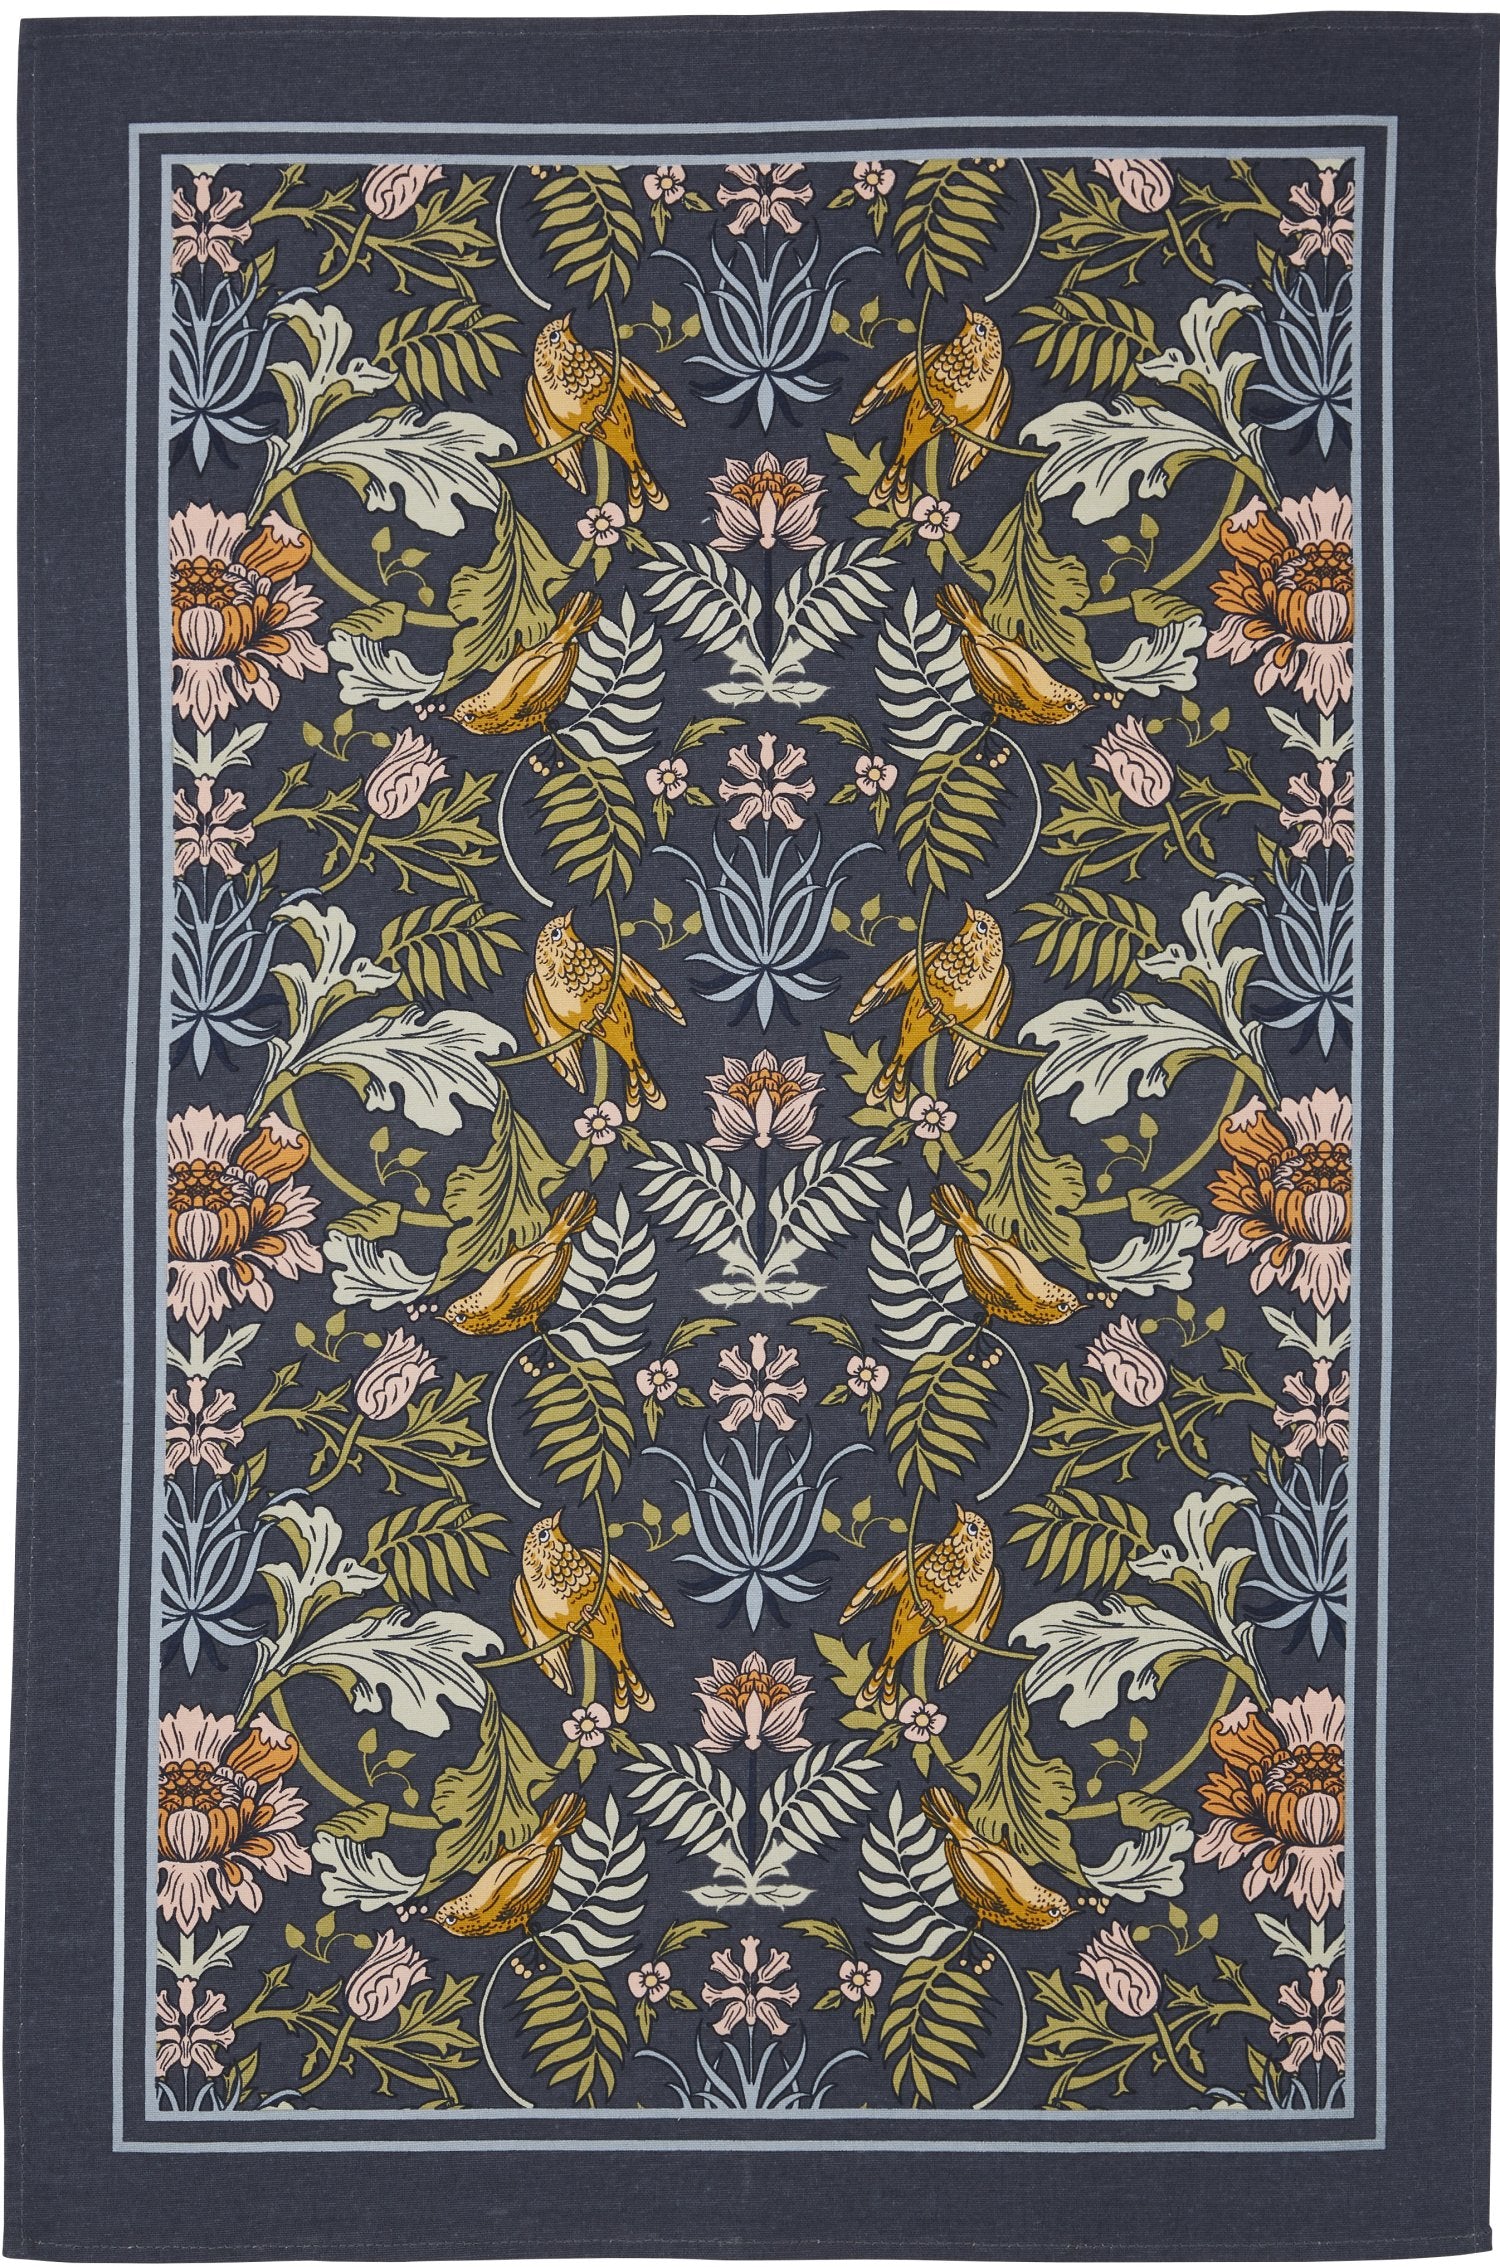 Ulster Weavers, "Finch & Flower", Printed cotton tea towel.